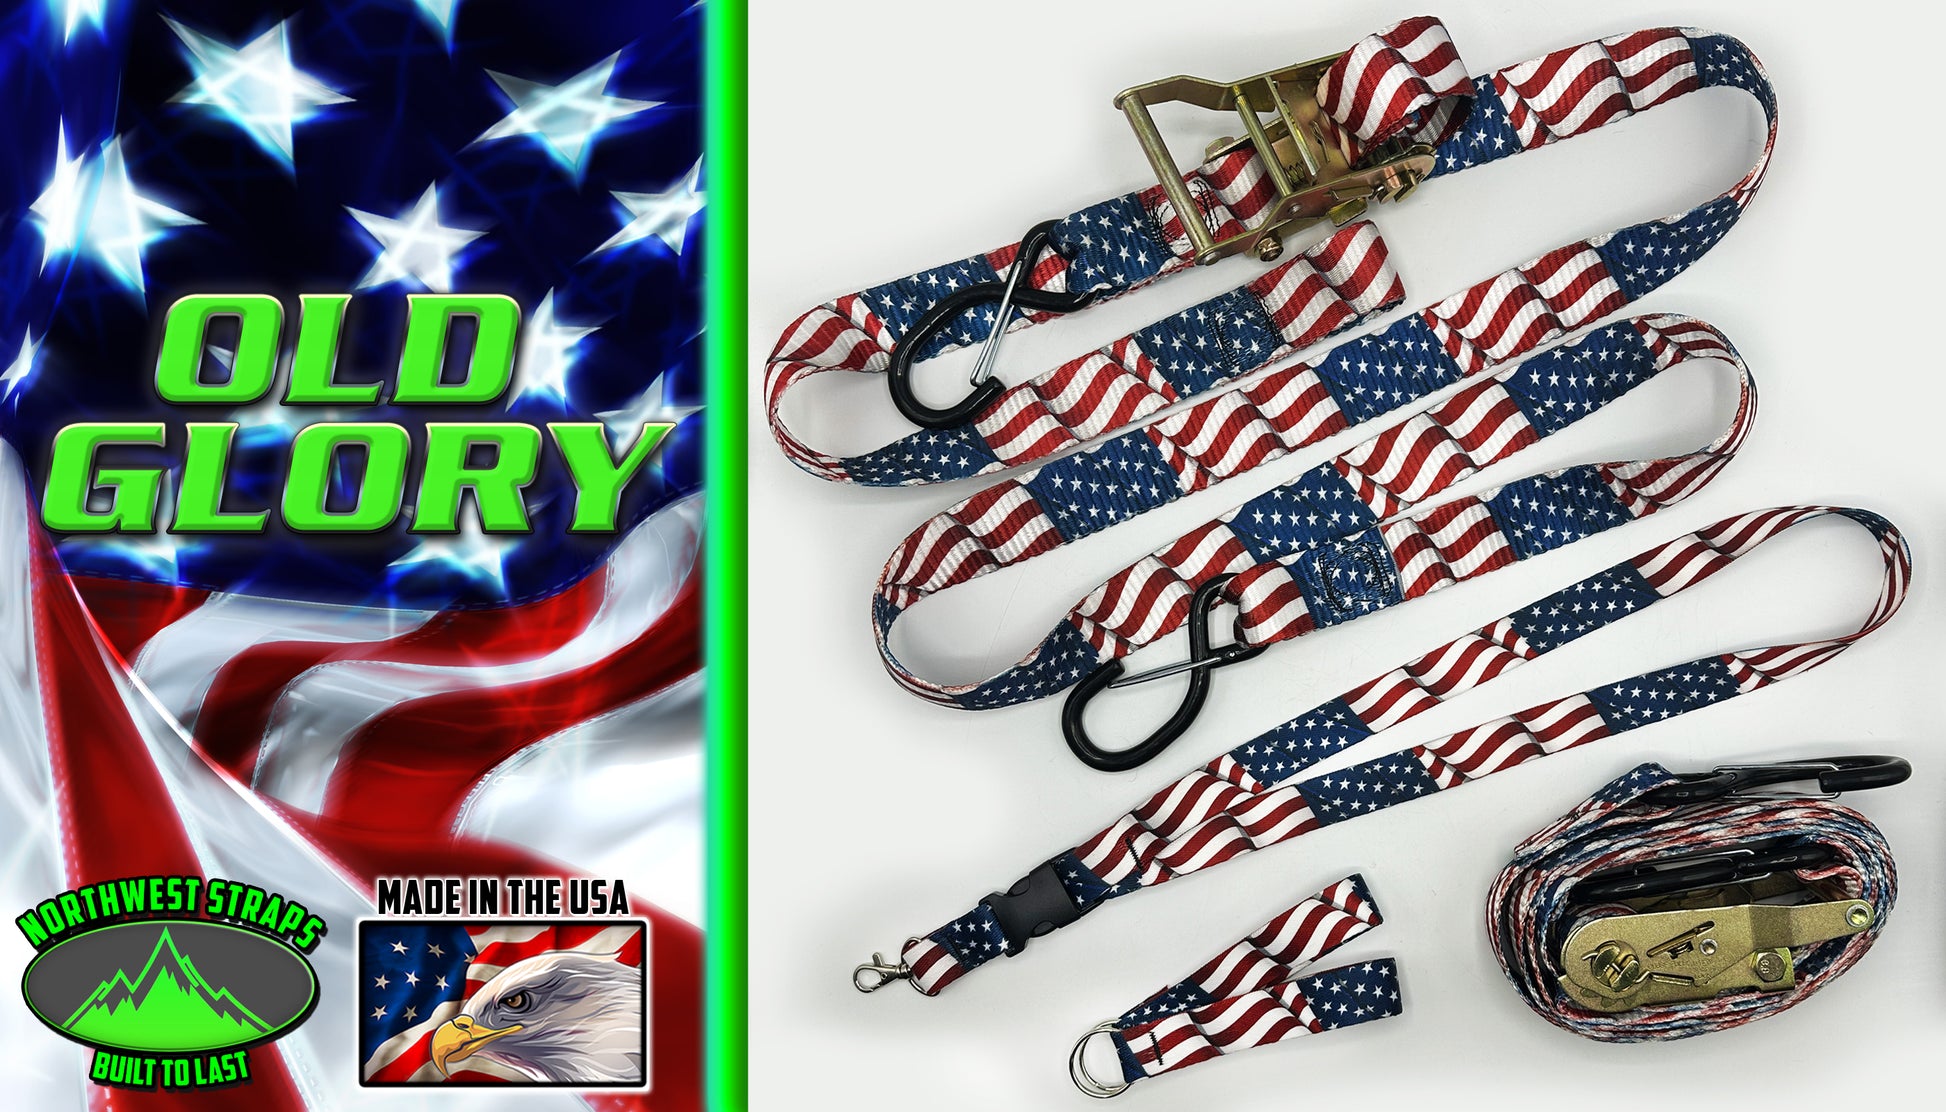 Old glory American flag Ratchet strap, keyfob, keychain and lanyard custom keyfob design by northwest straps.